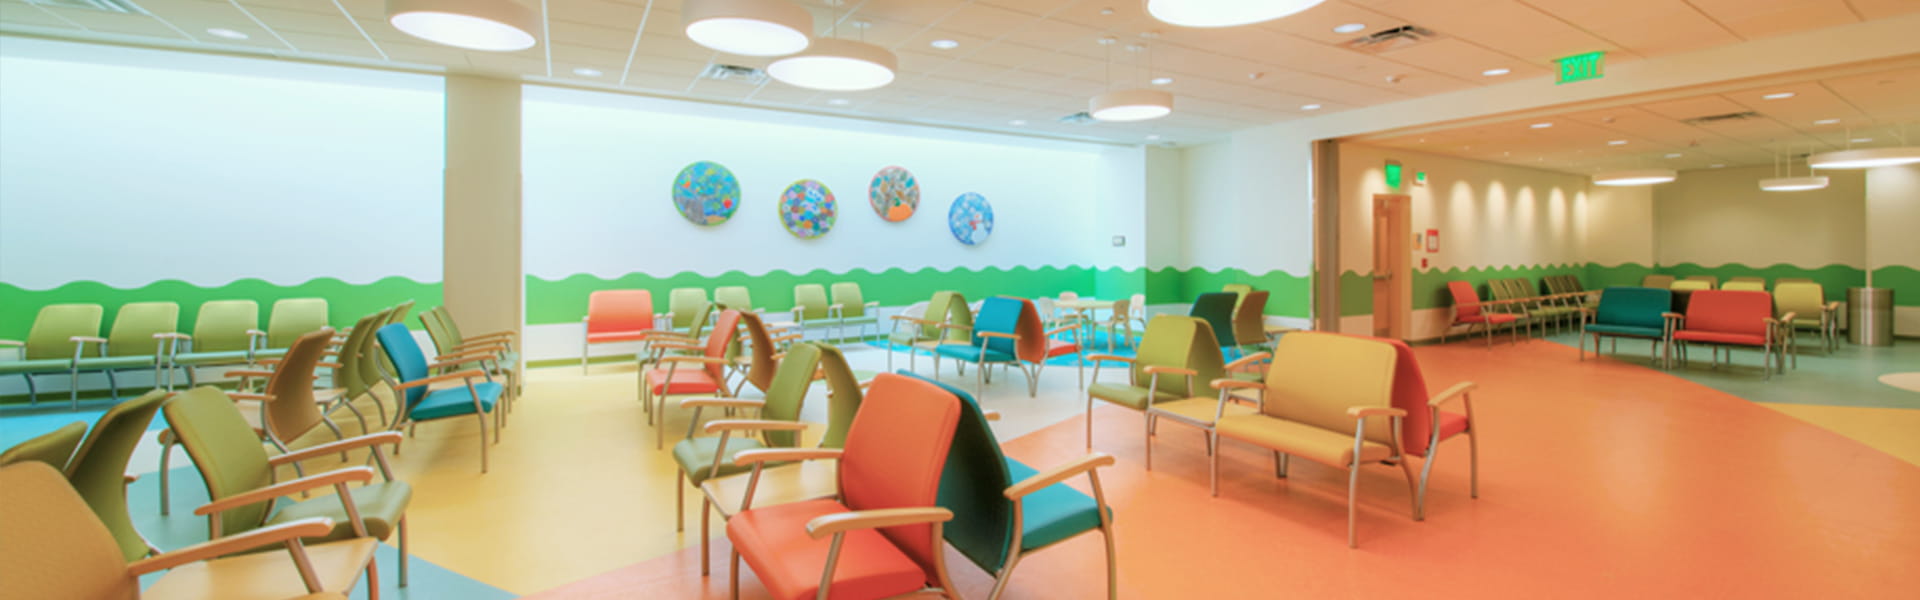 Waiting area of DMC Children's Hospital of Michigan.